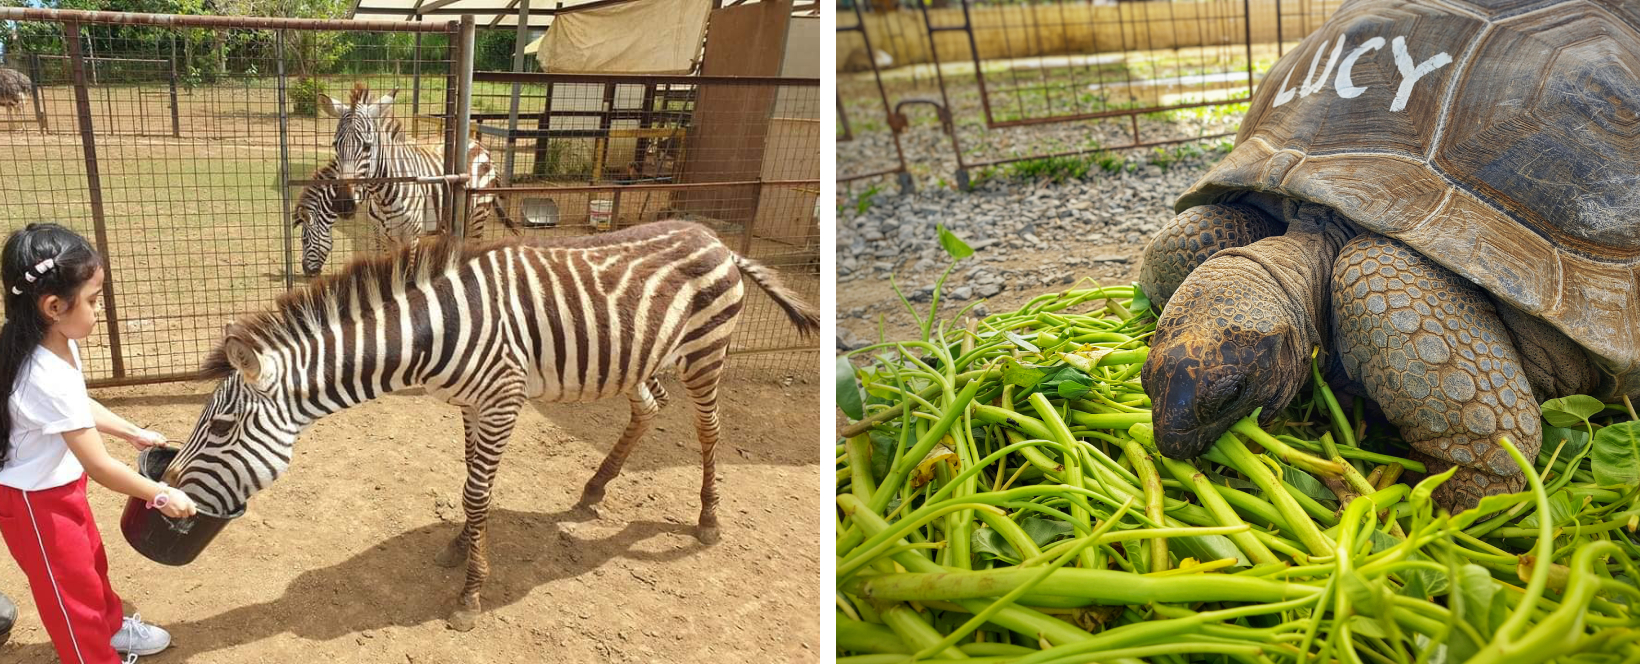 Yoki's Farm - zebras and tortoises